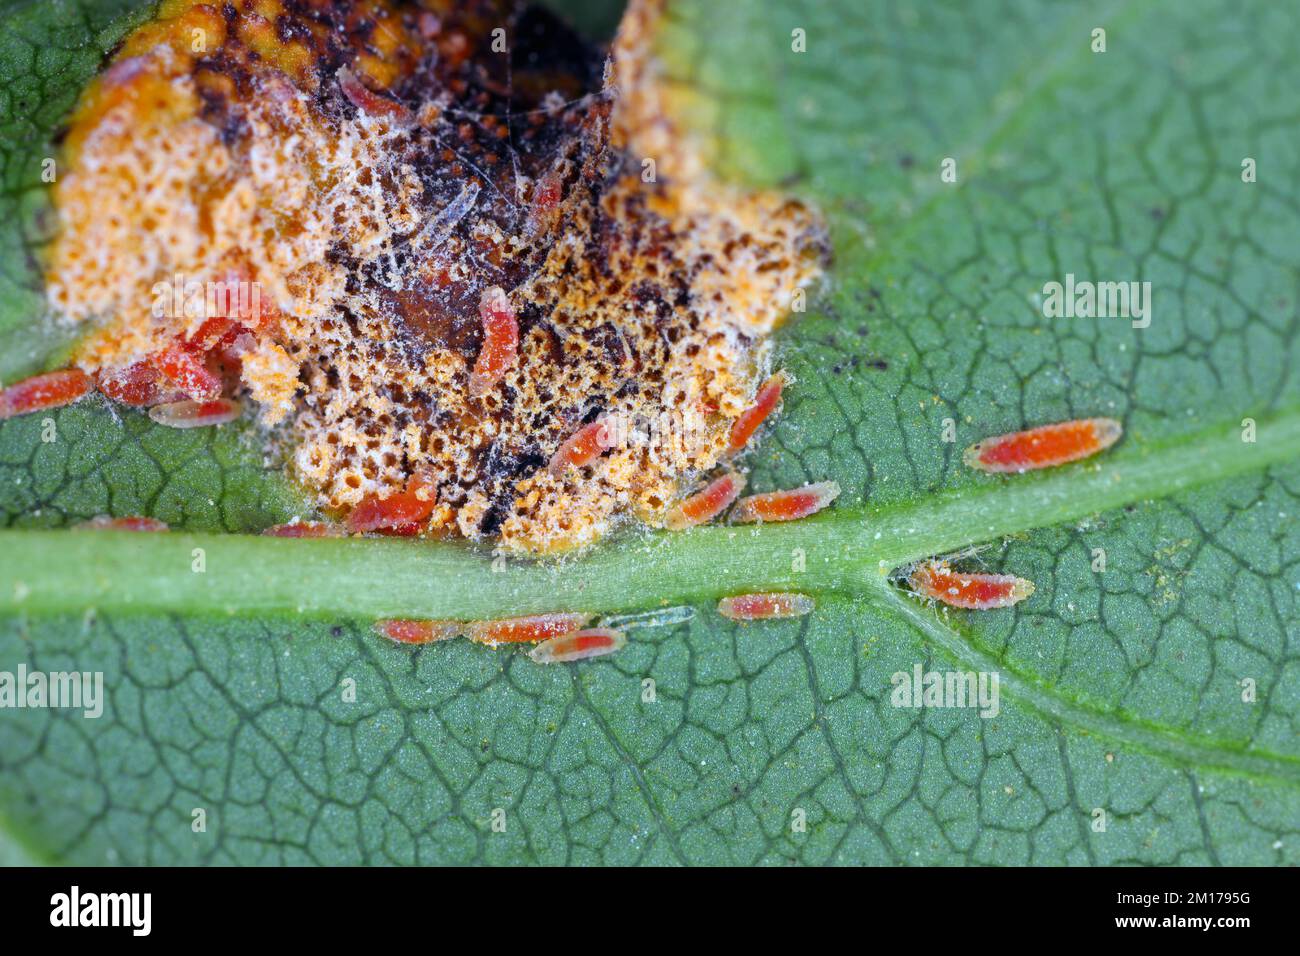 Larvae of Mycopdiplosis coniophaga feeding on aeciospores of Puccinia coronata on Rhamnus utilis. Cecidomyiidae is a family of flies known as gall... Stock Photo